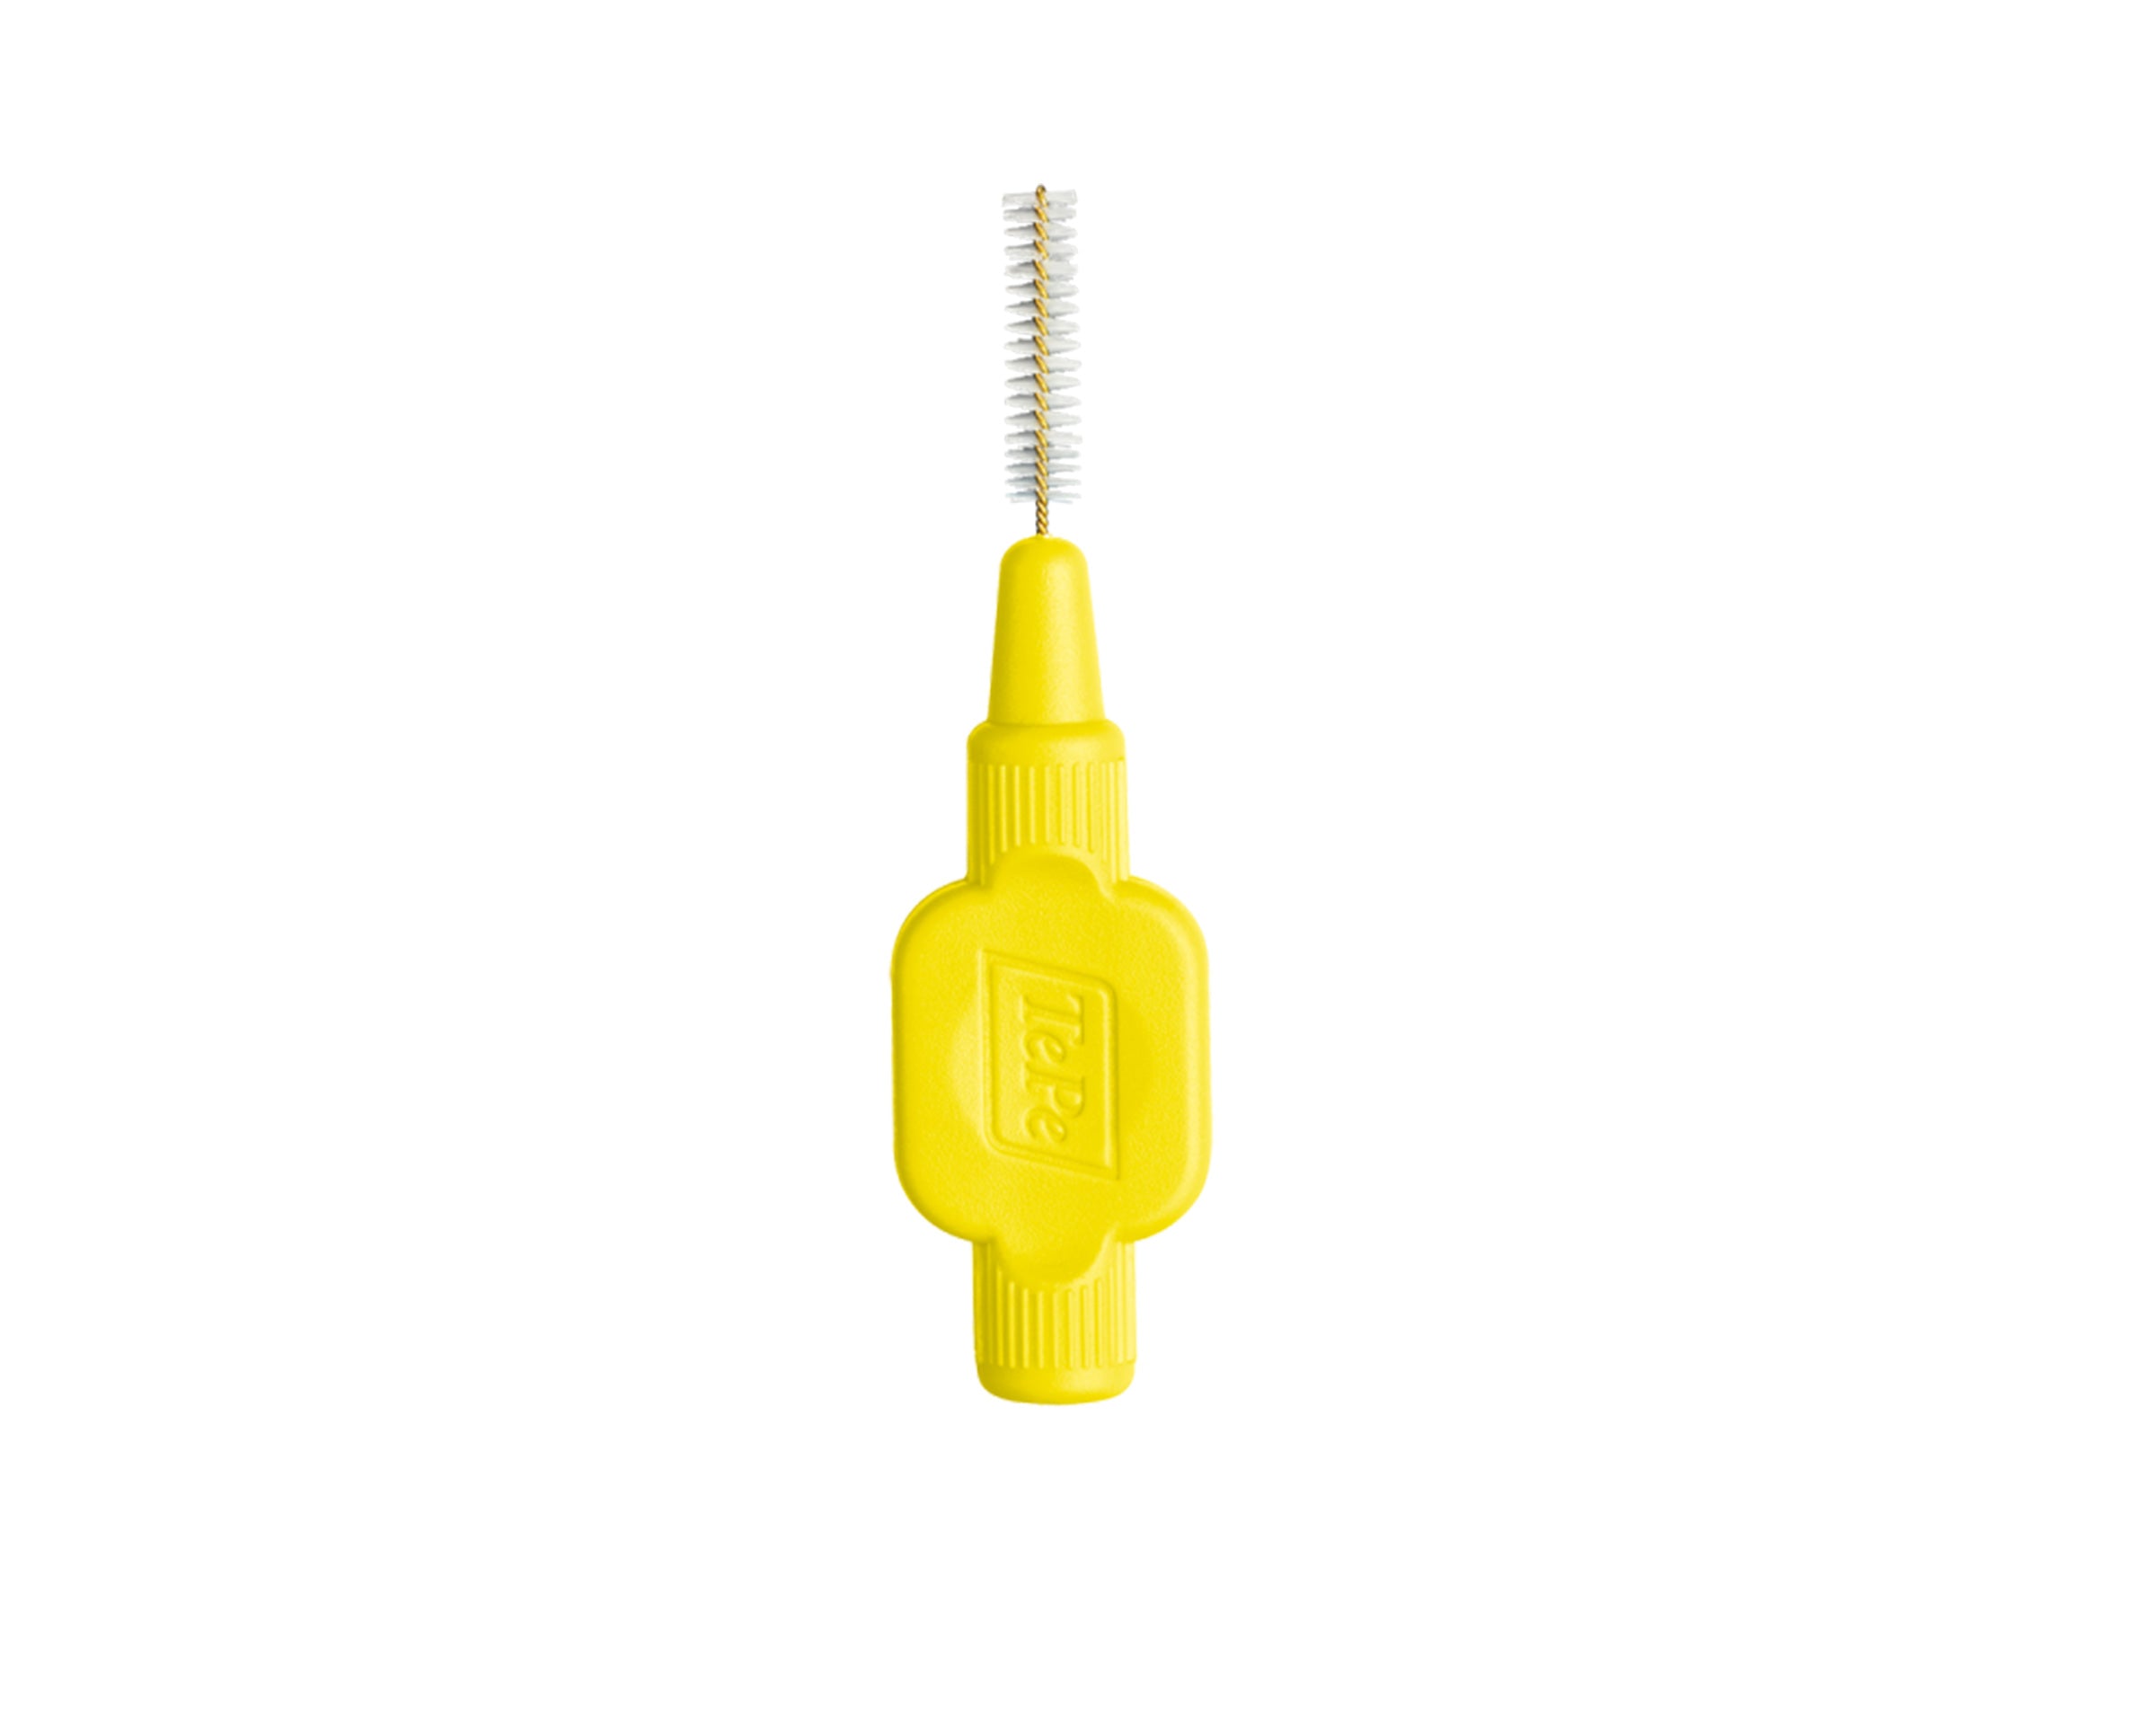 TePe Interdentalbürste – gelb / 0,7 mm / ISO Grösse 4